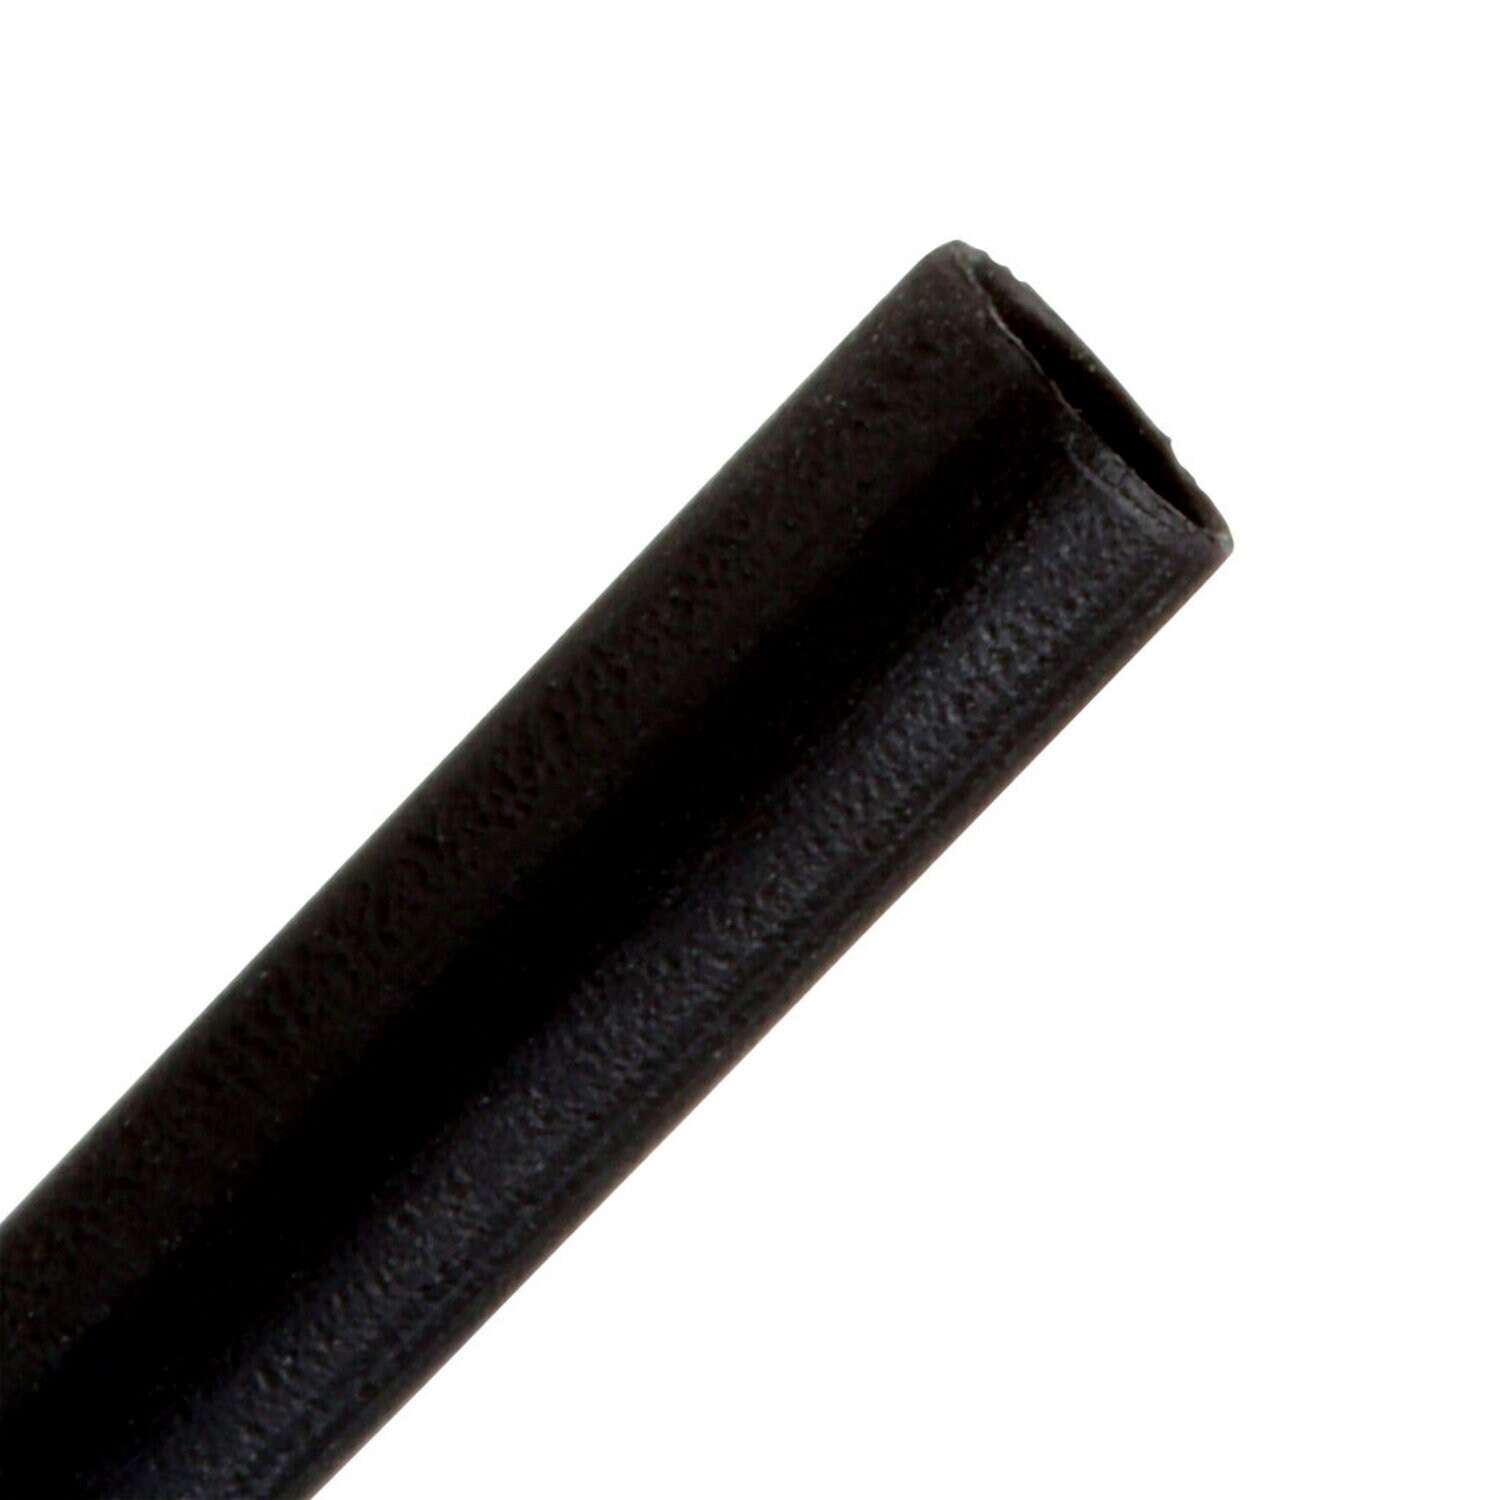 7100029976 - 3M Heat Shrink Thin-Wall Tubing FP-301-3/32-Black-500`: 500 ft spool
length, 1500 linear ft/box, 3 Rolls/Case